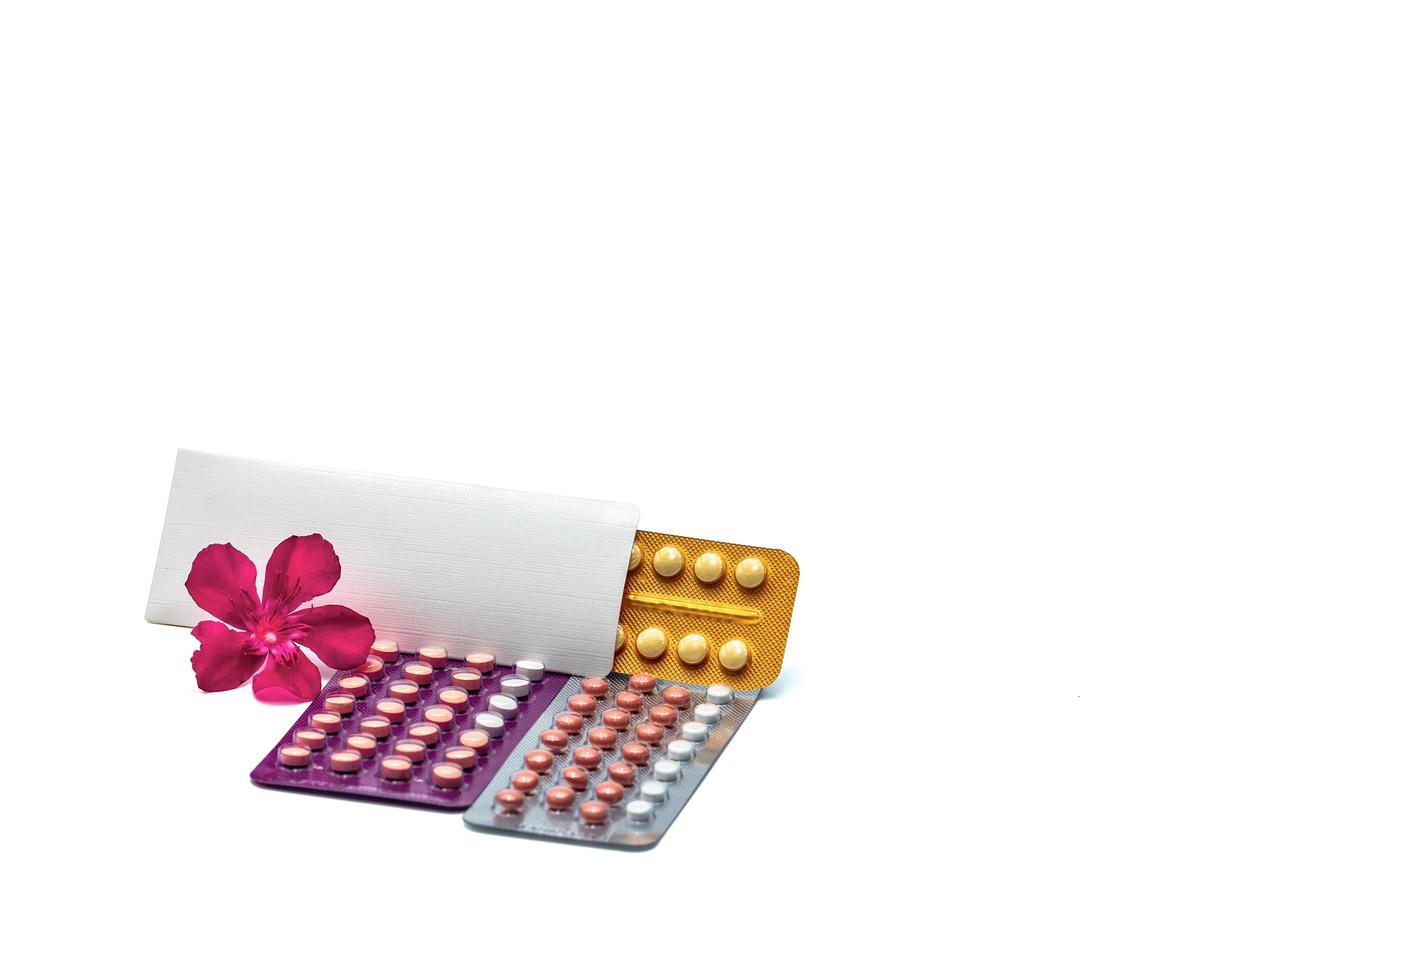 píldoras anticonceptivas o píldoras anticonceptivas con flor rosa sobre fondo blanco con espacio para copiar. hormona para la anticoncepción. concepto de planificación familiar. comprimidos redondos de hormonas en blíster. foto